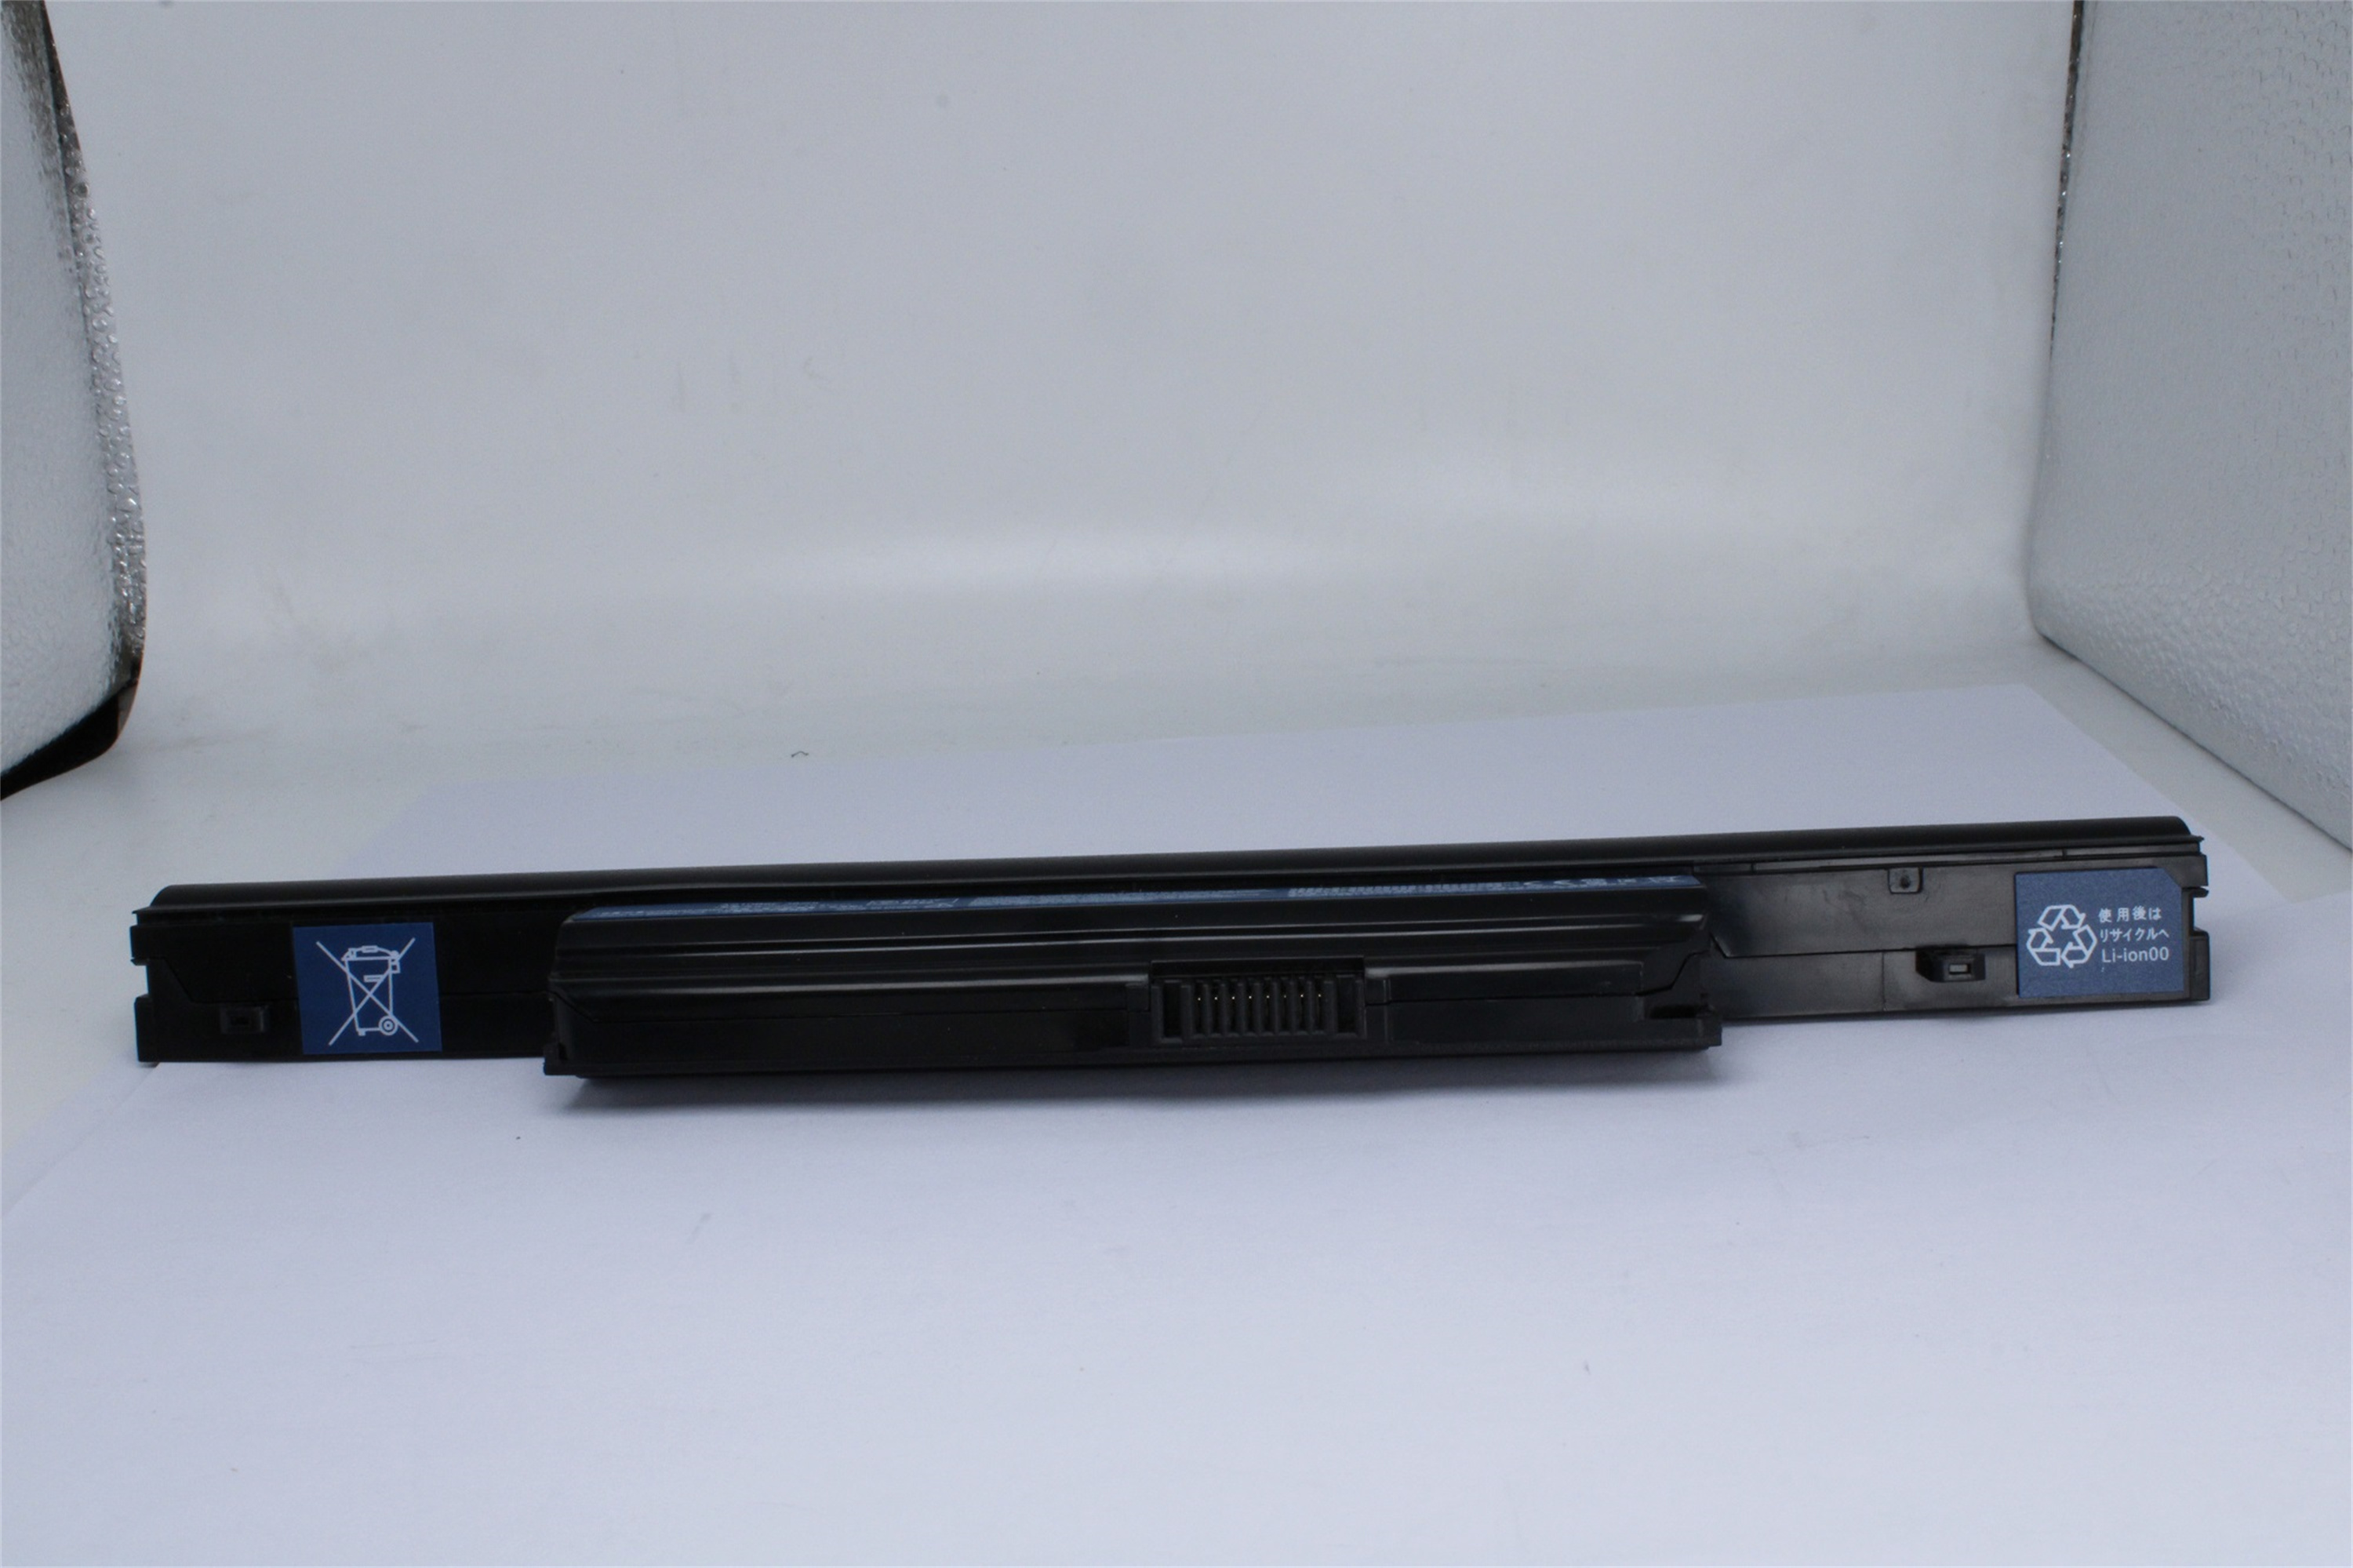 Best Seller OEM Manufacturer laptop battery lithium ion batteries AS10B6E for Acer 3820 3820T 3820TG 3820TZ 4553 4745G